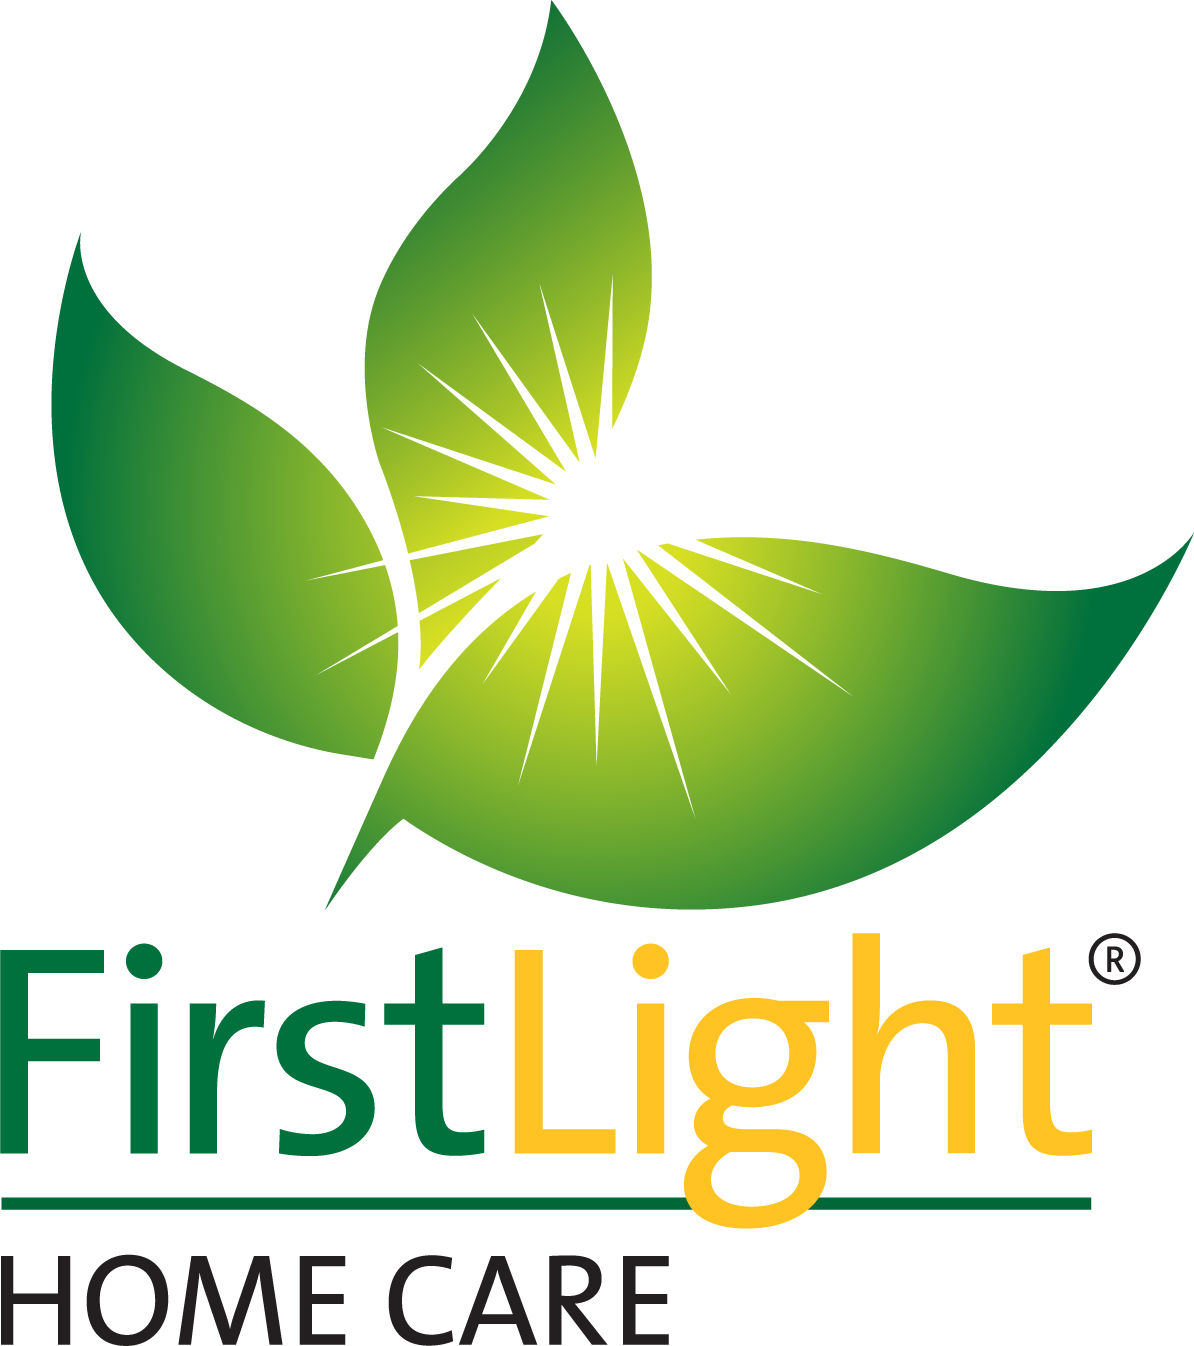 C. FirstLight Home Care (Nivel 2)